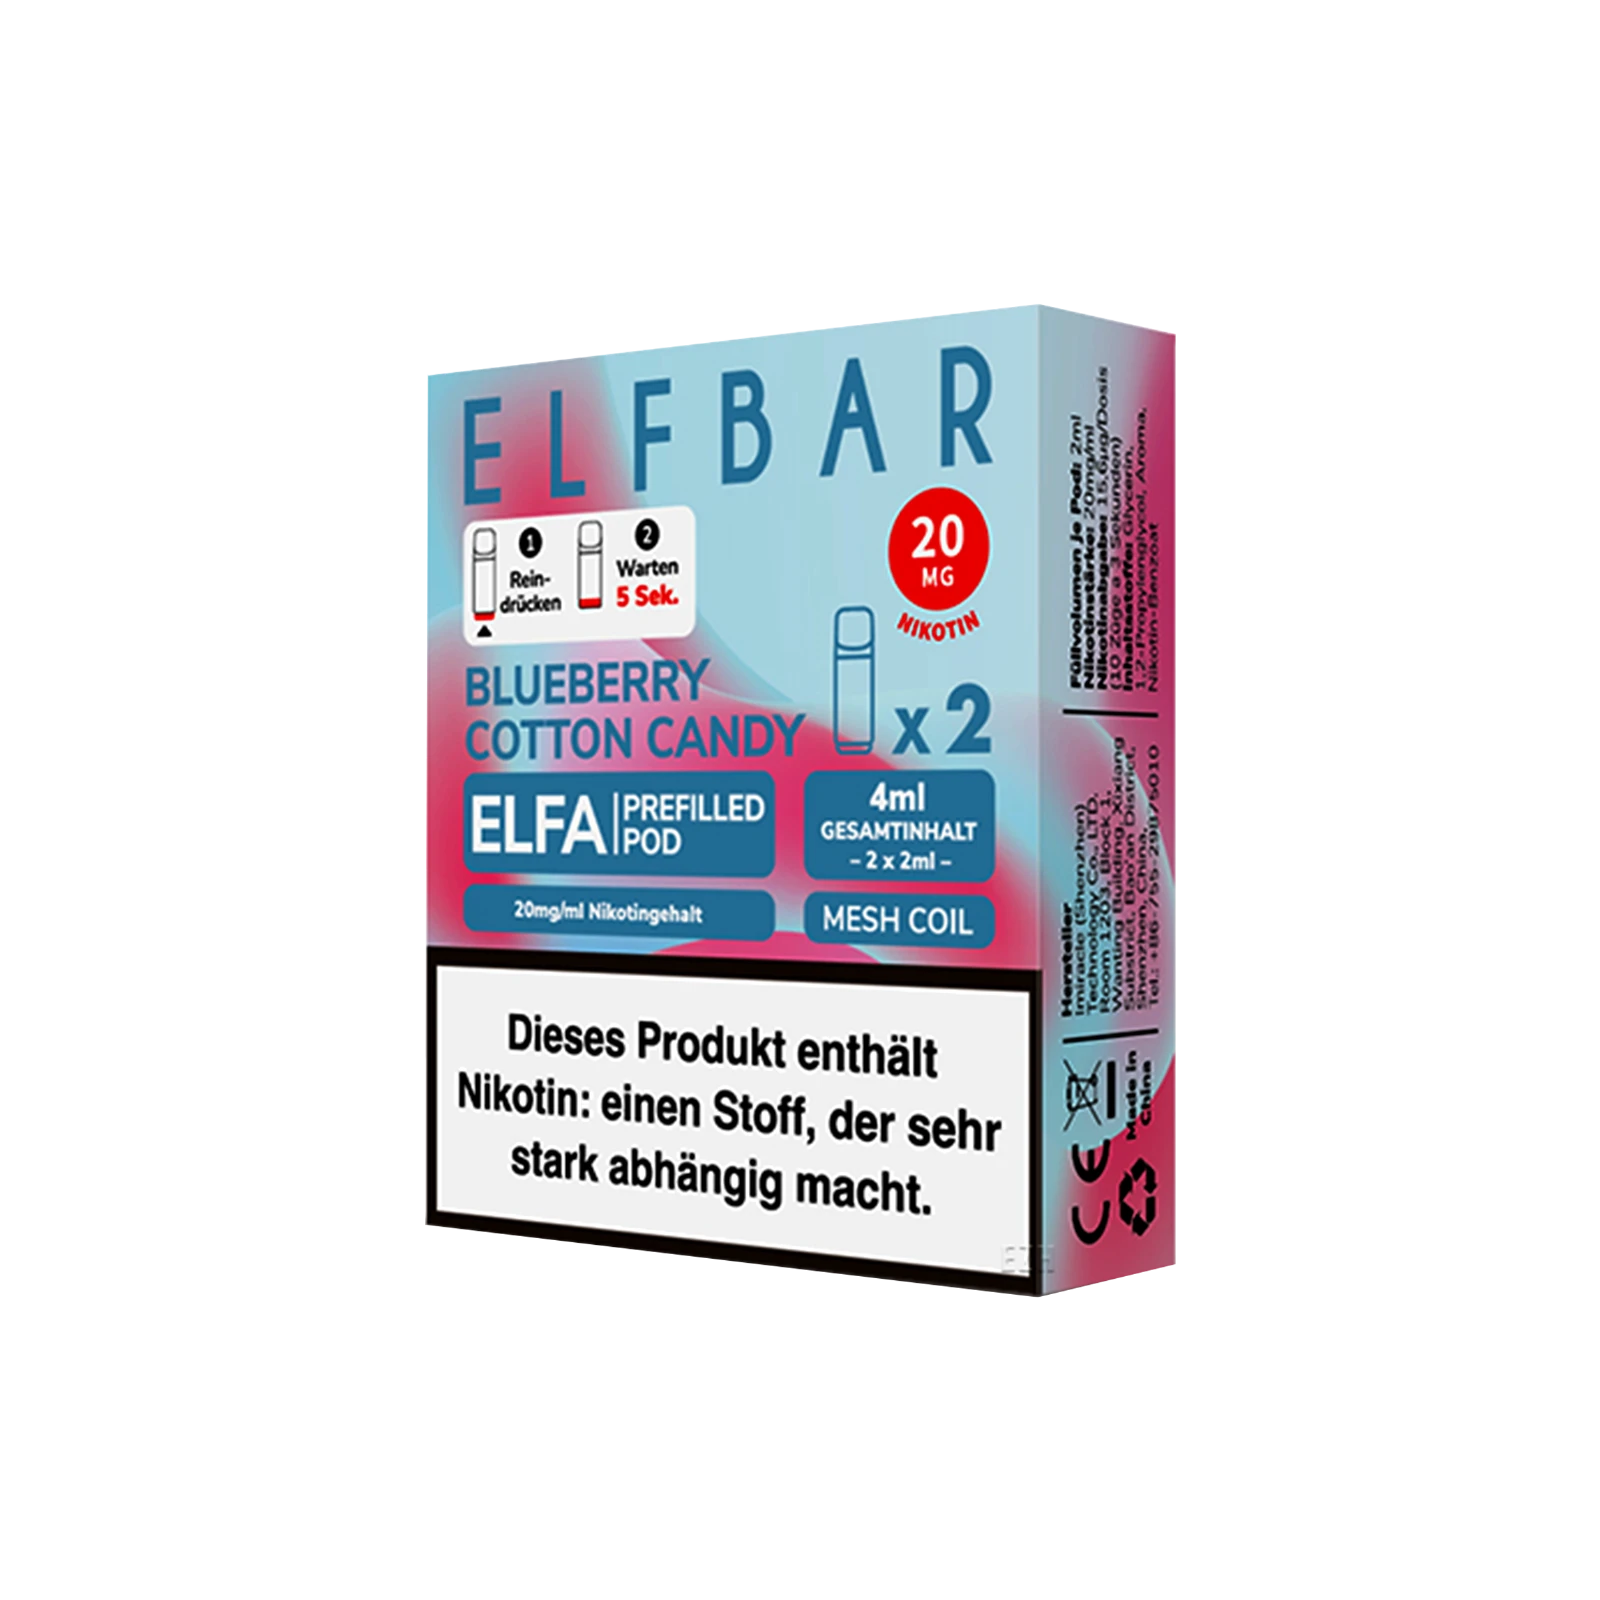 Elf Bar ELFA Prefilled Pod Blueberry Cotton Candy | Neue Liquid Sorten